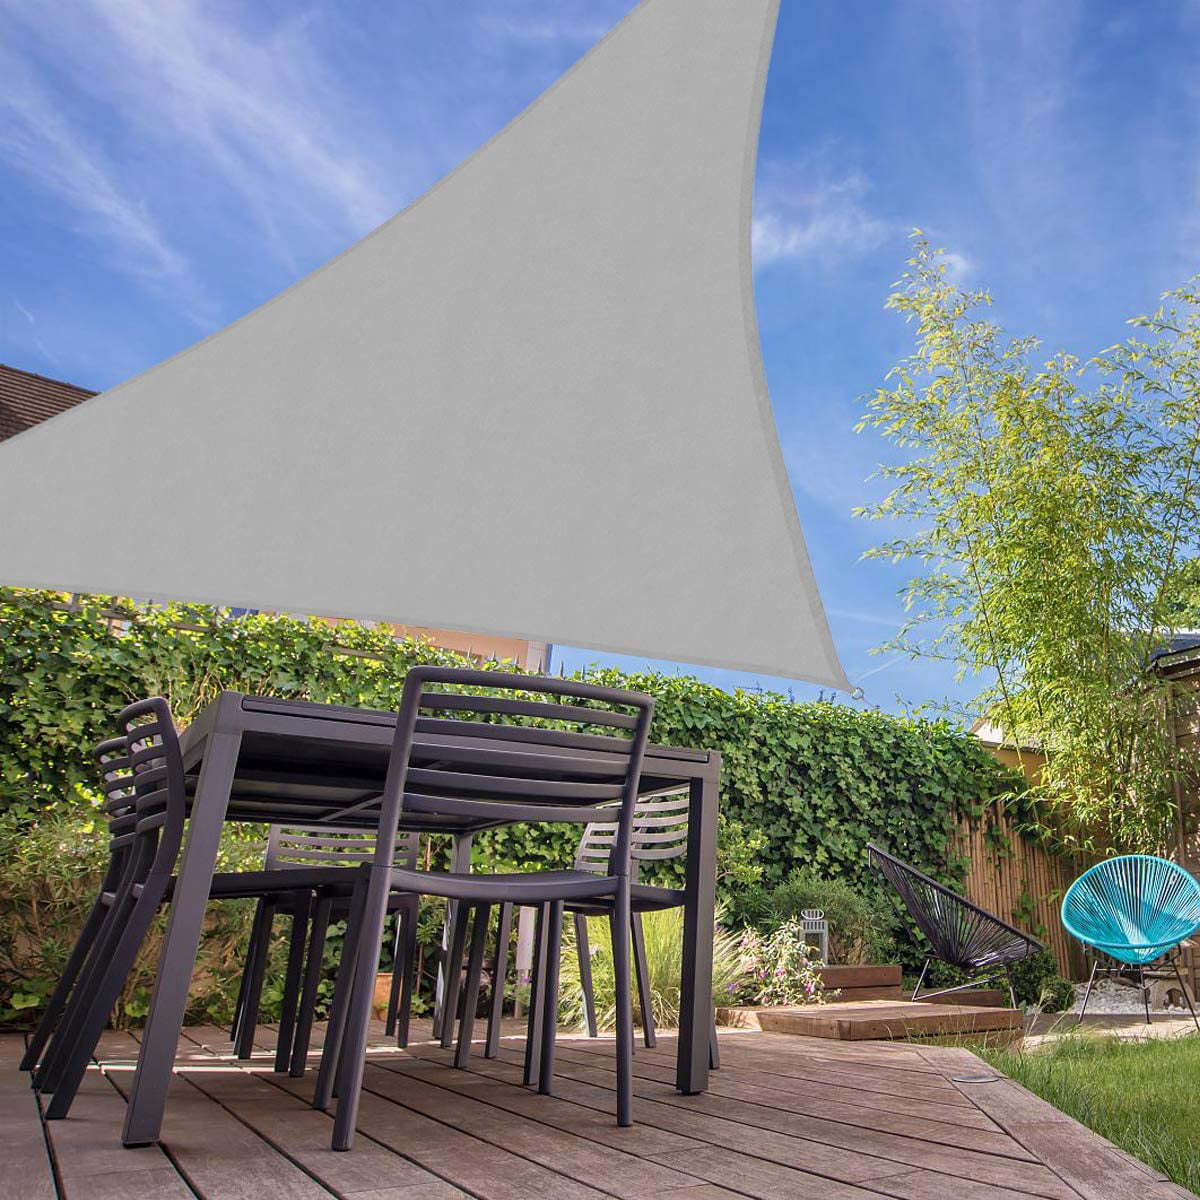 Details about   Summer Outdoorwaterproof Oxford Cloth Sunscreenrain Cover Garden Courtyardawning 